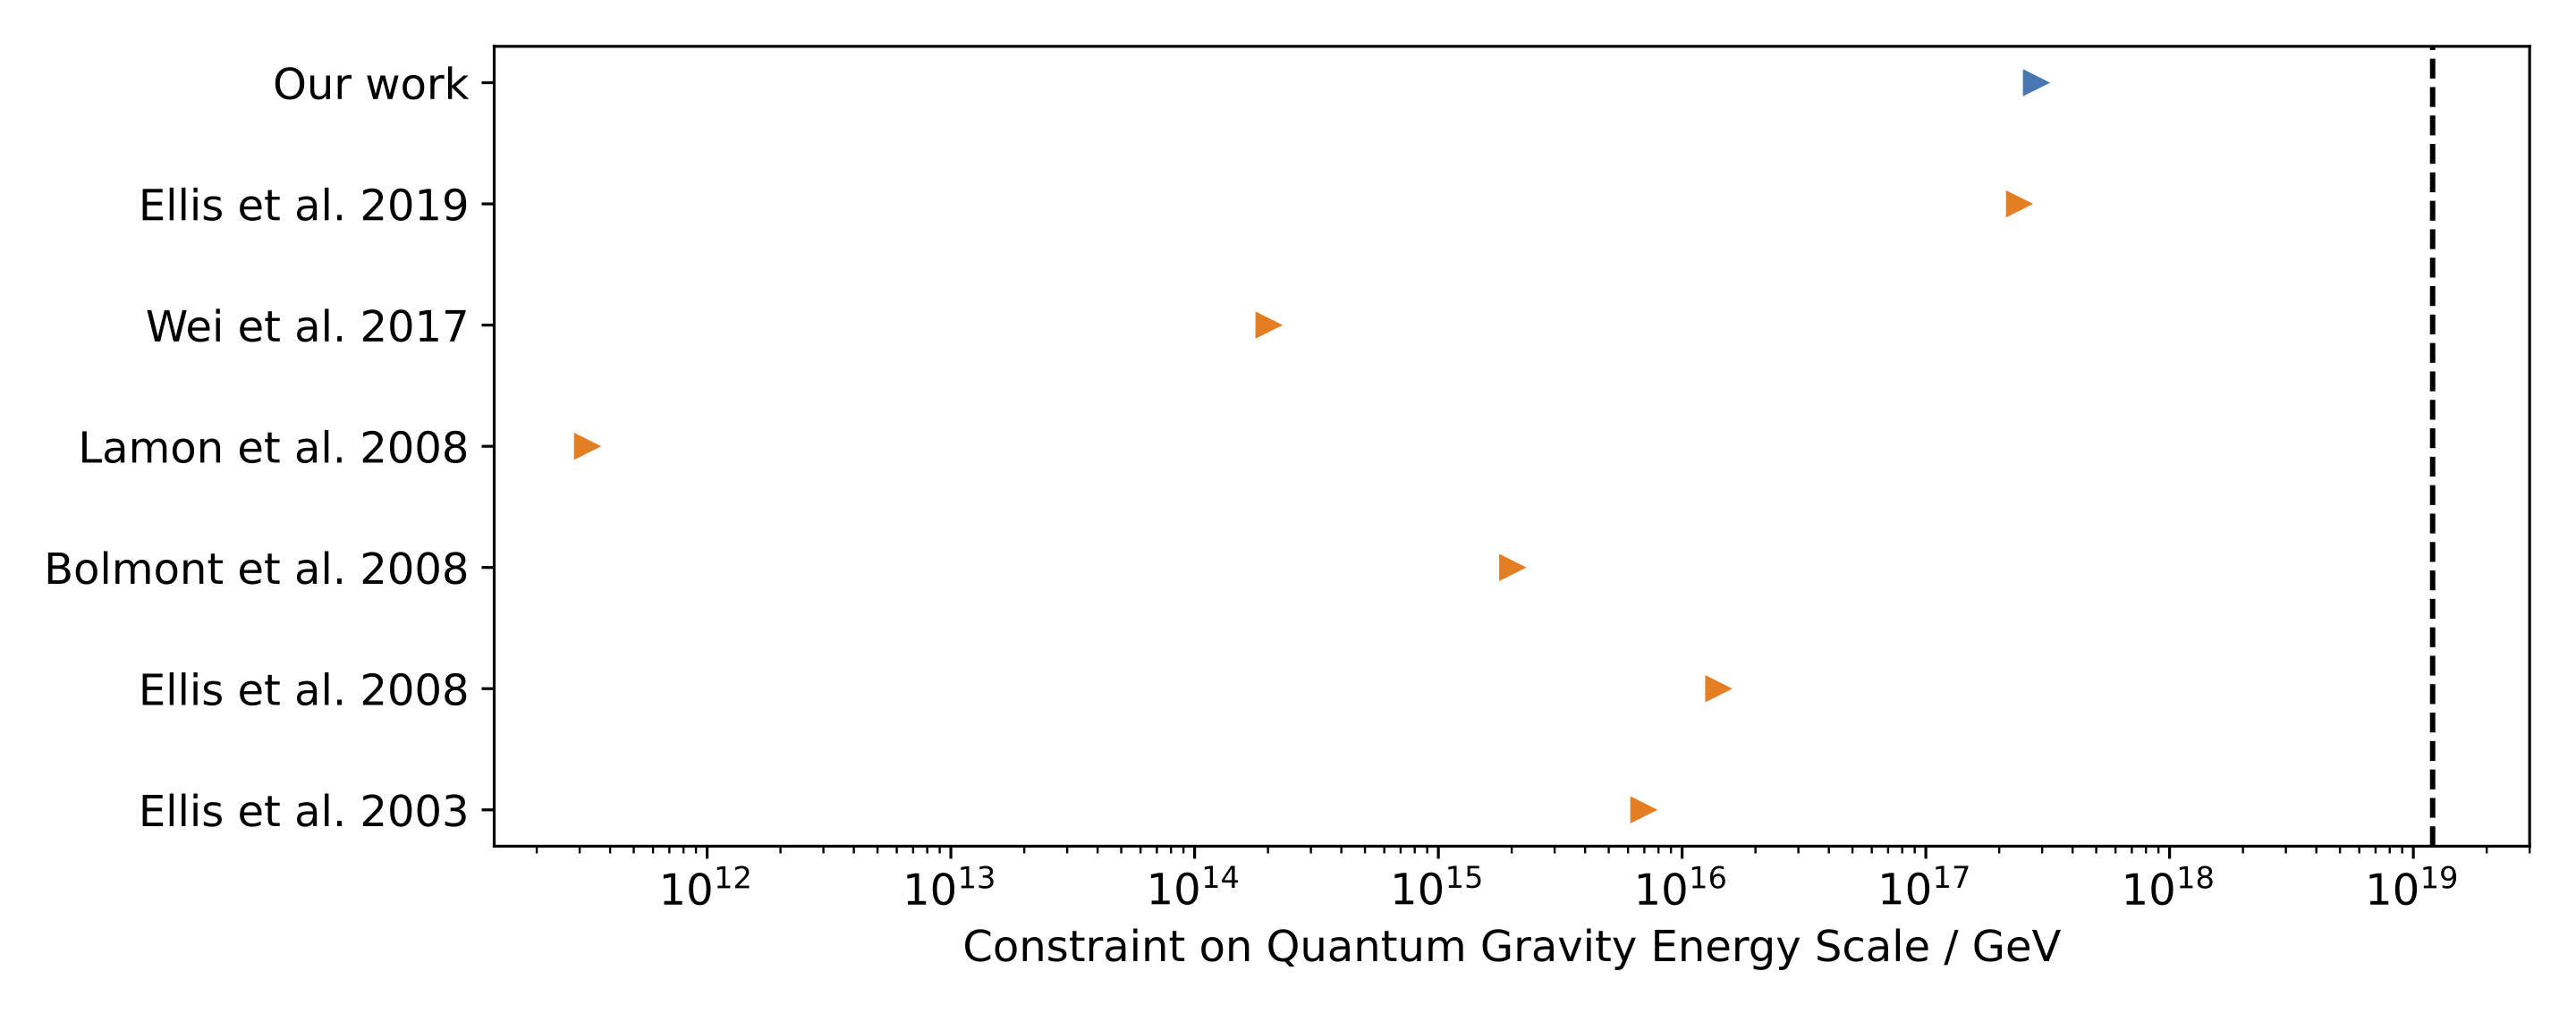 Quantum gravity constraints compared to the literature